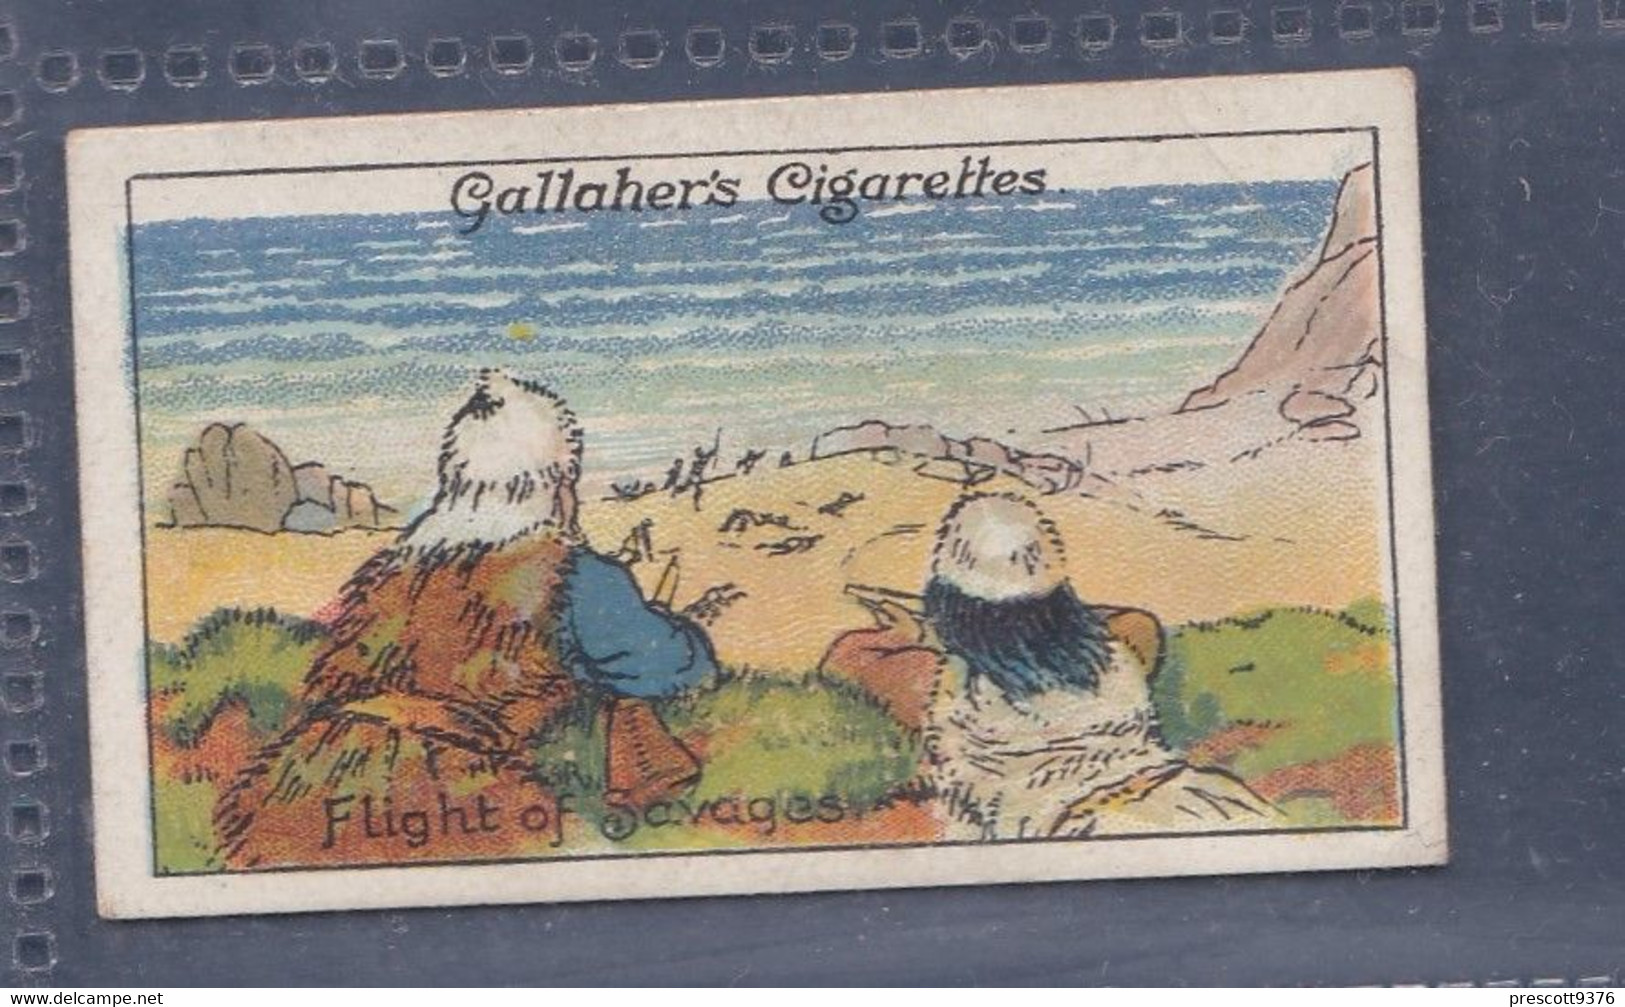 Robinson Crusoe 1928 - 80 Flight Of The Savages  - Gallaher Original Cigarette Card. - Gallaher